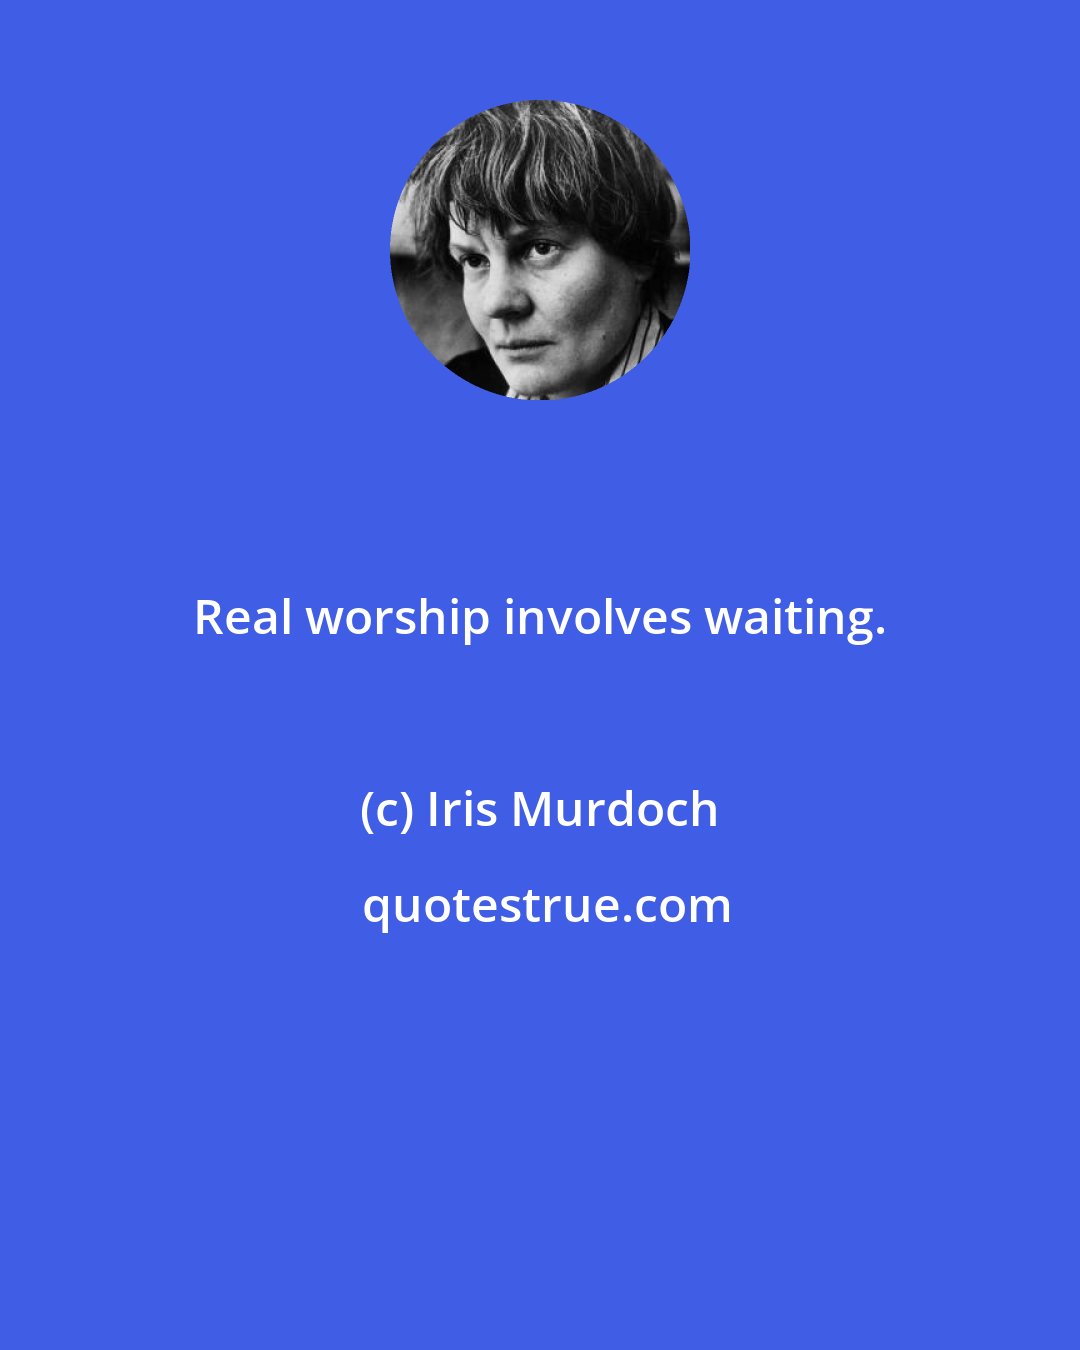 Iris Murdoch: Real worship involves waiting.